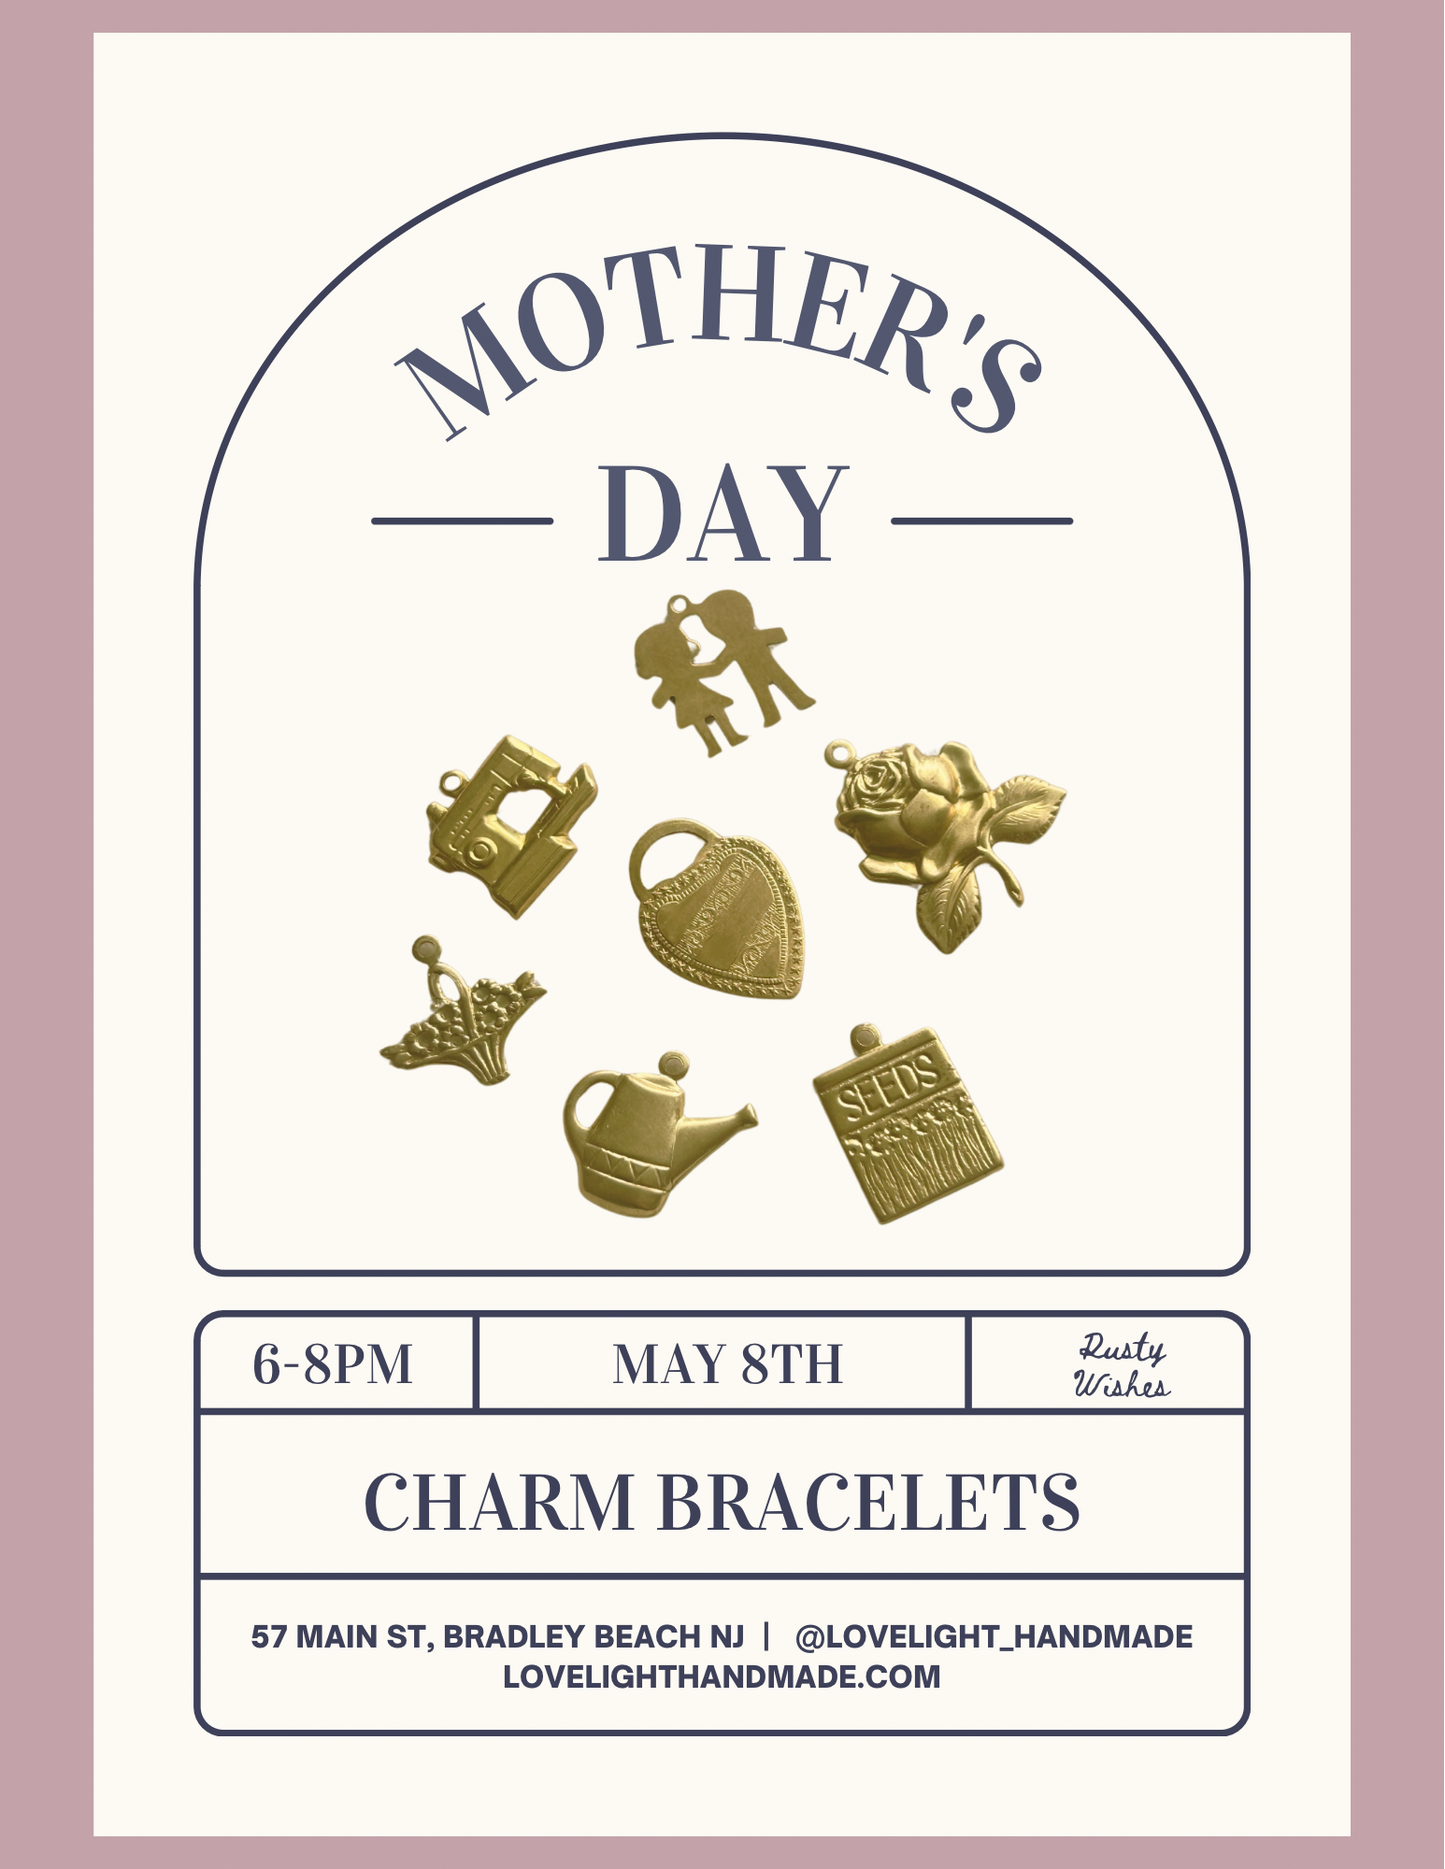 Charm Bracelet Workshop with Rusty Wishes 4/26 & 5/8